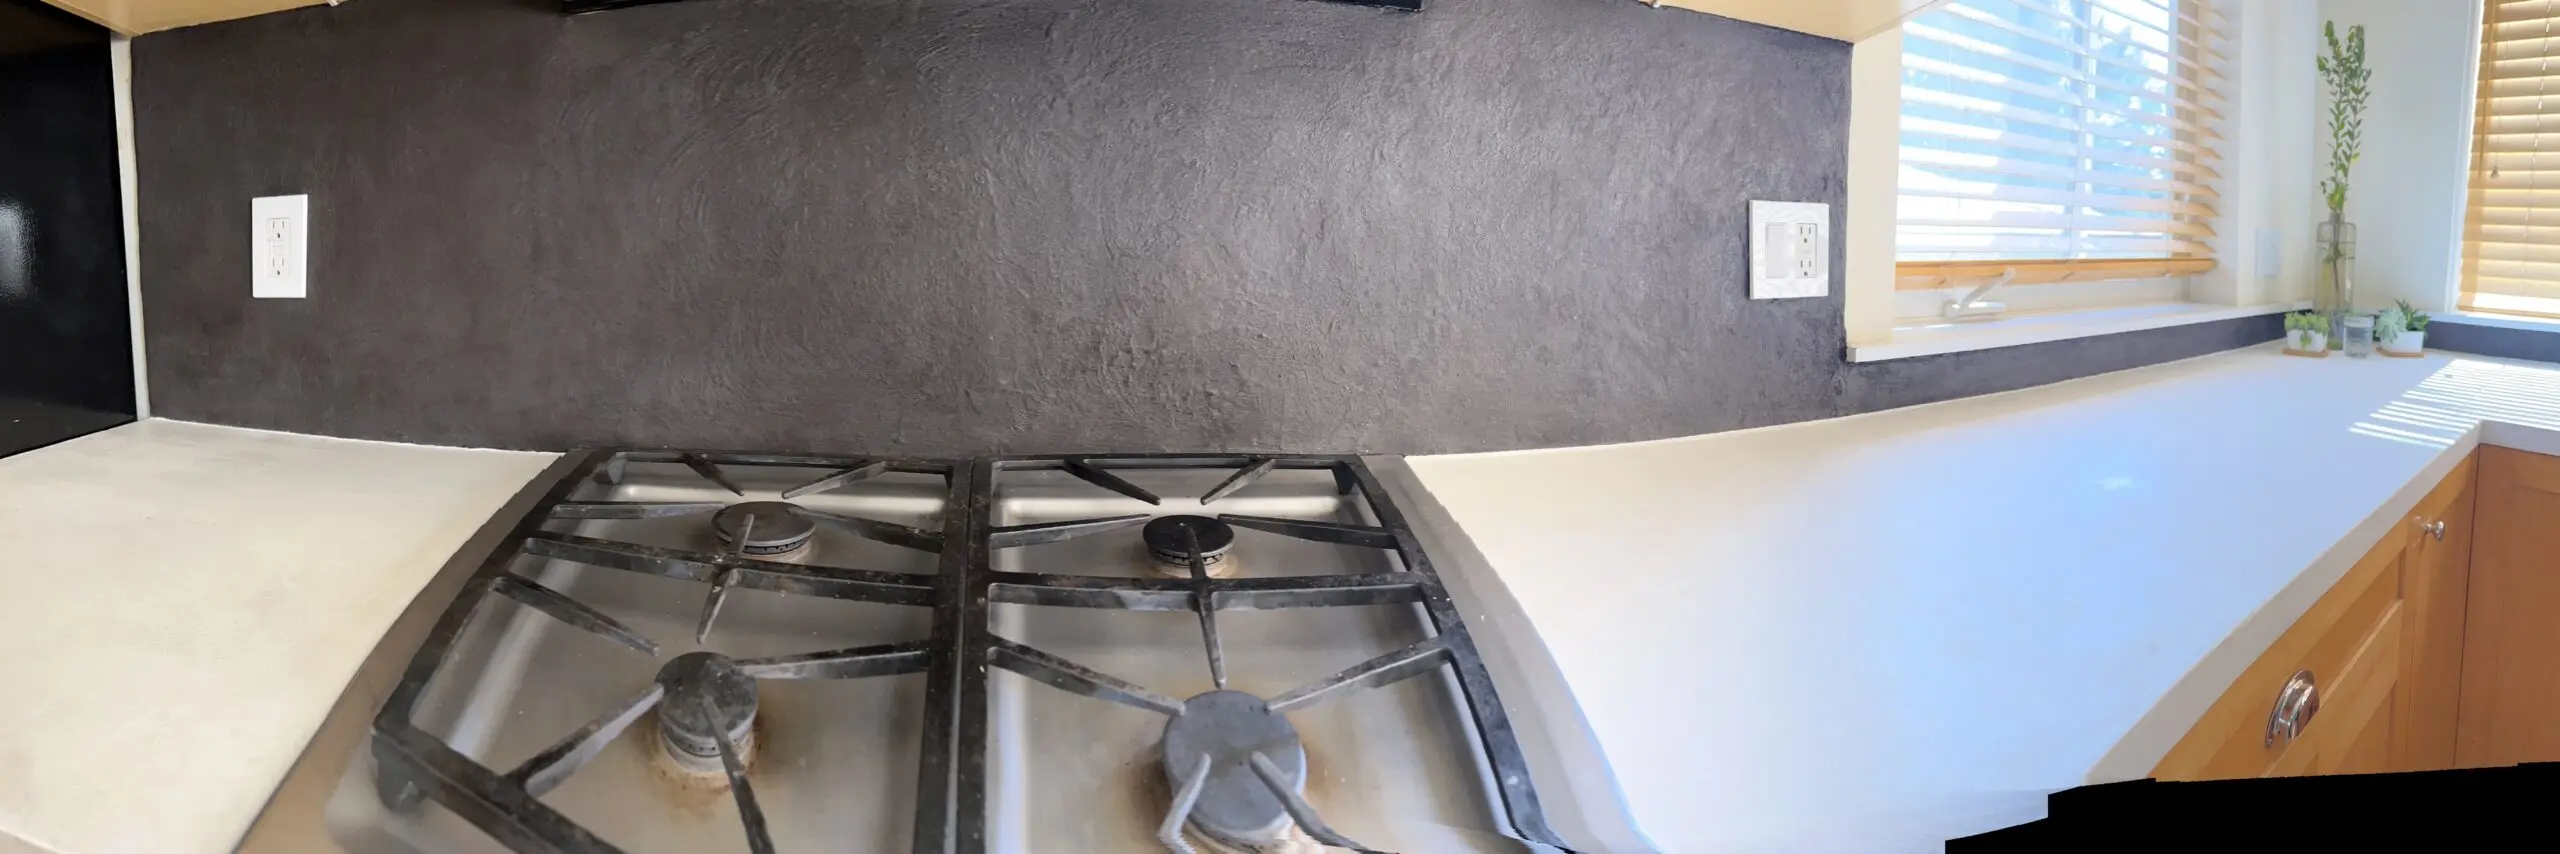 Revitalized kitchen countertop and backsplash featuring pearl white concrete overlay on Formica countertop and titanium concrete overlay on tile backsplash